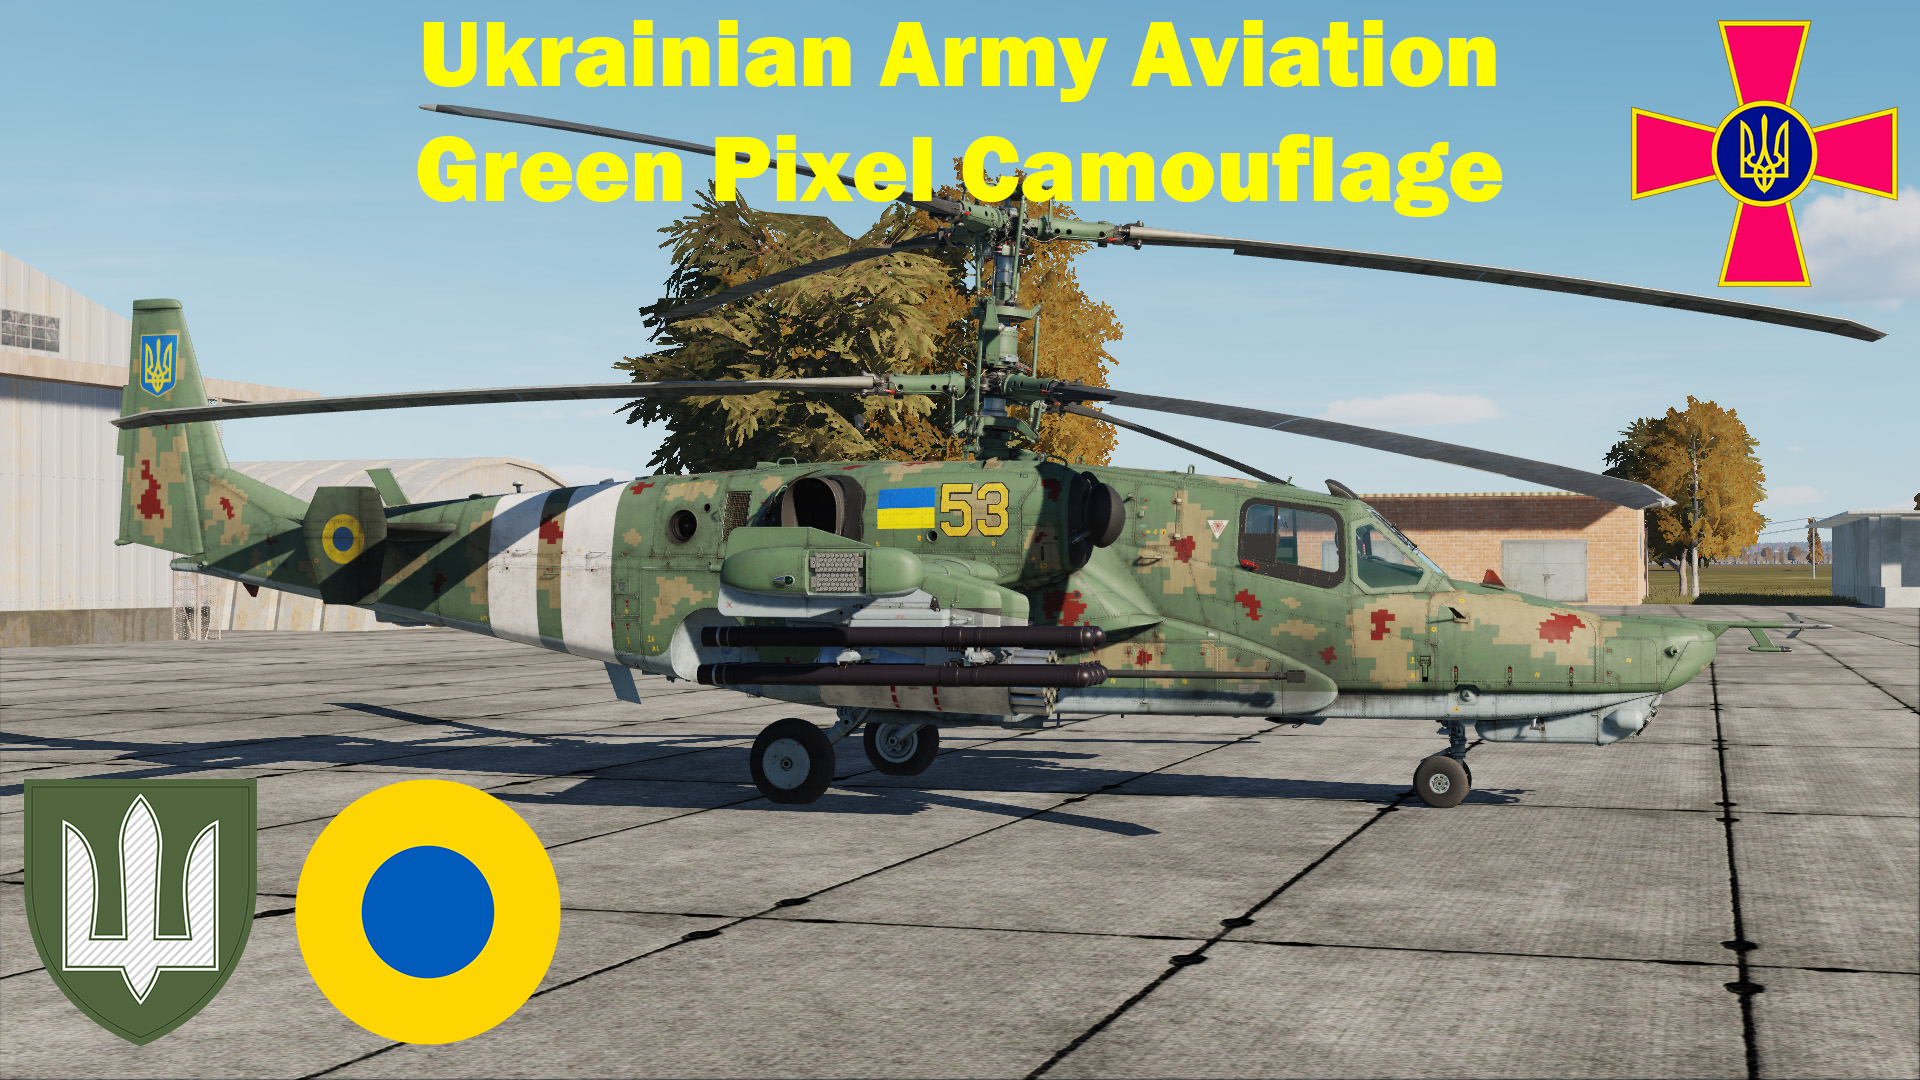 Ka-50 III - Green Pixel Camo of Ukrainian Army Aviation (Fictional)